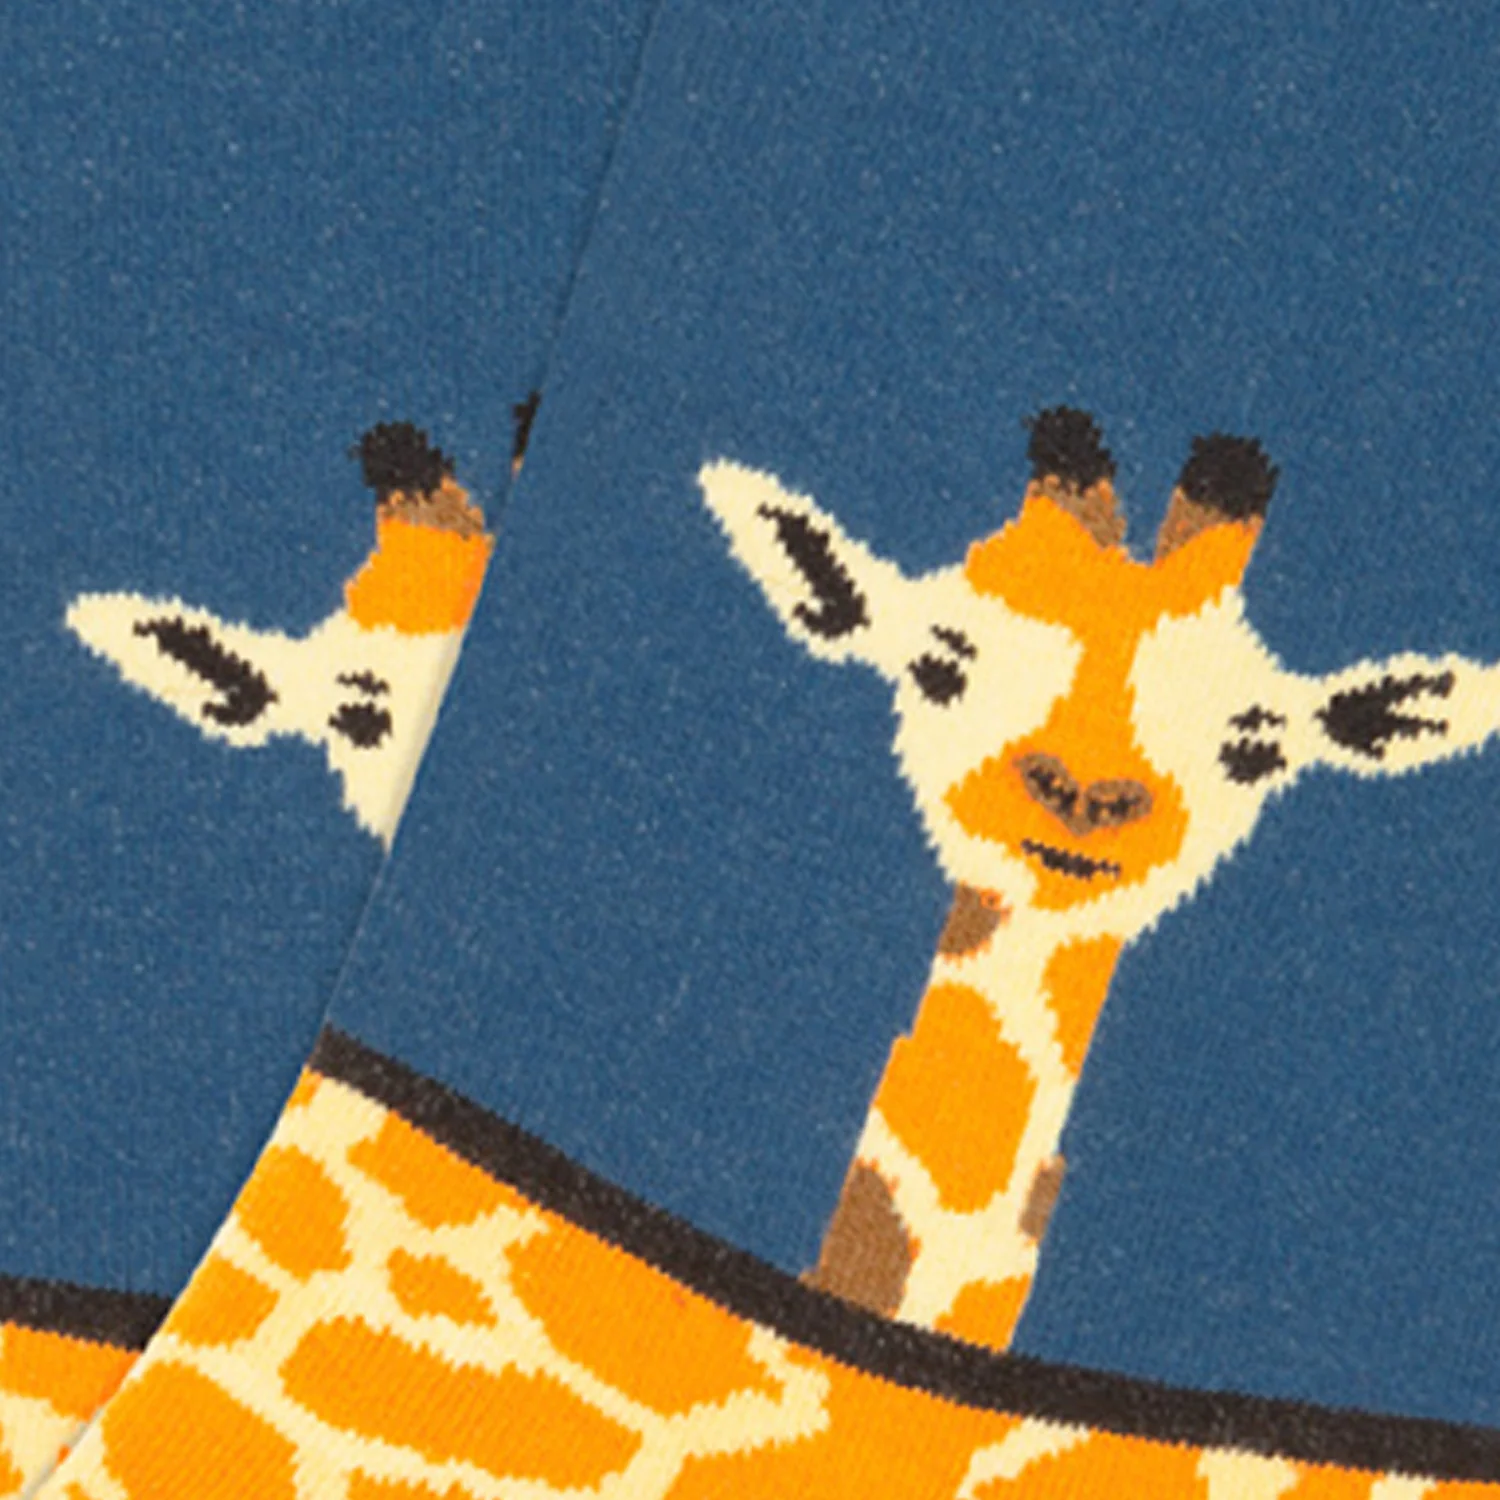 Calcetín de jimmy Lion modelo Giraffe.